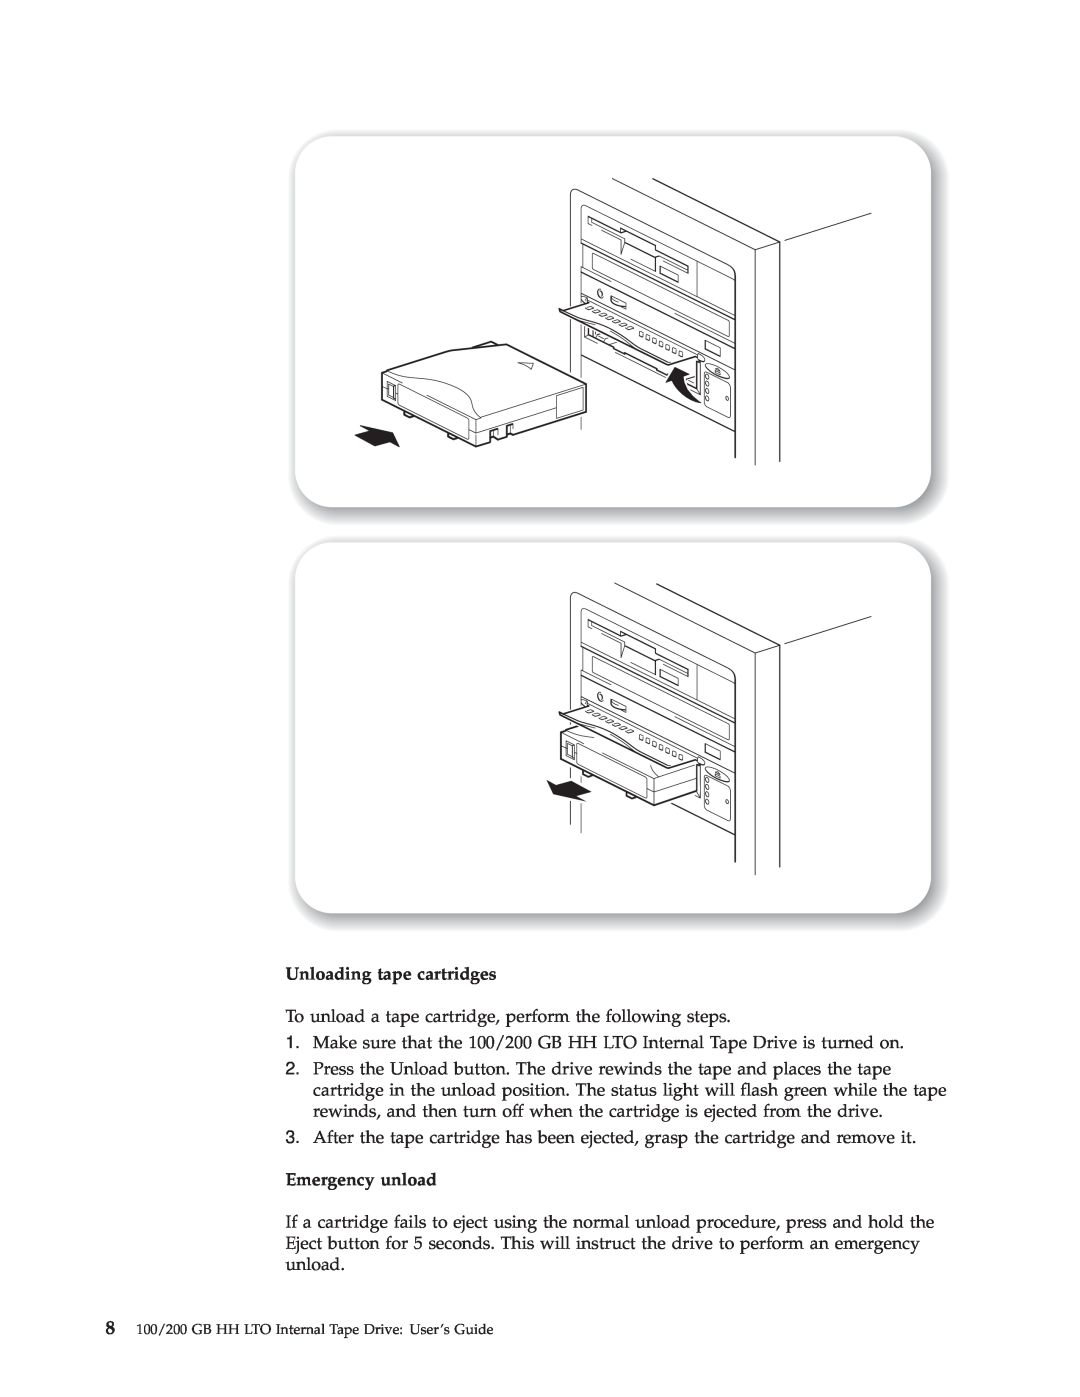 IBM HH LTO manual Unloading tape cartridges, Emergency unload 